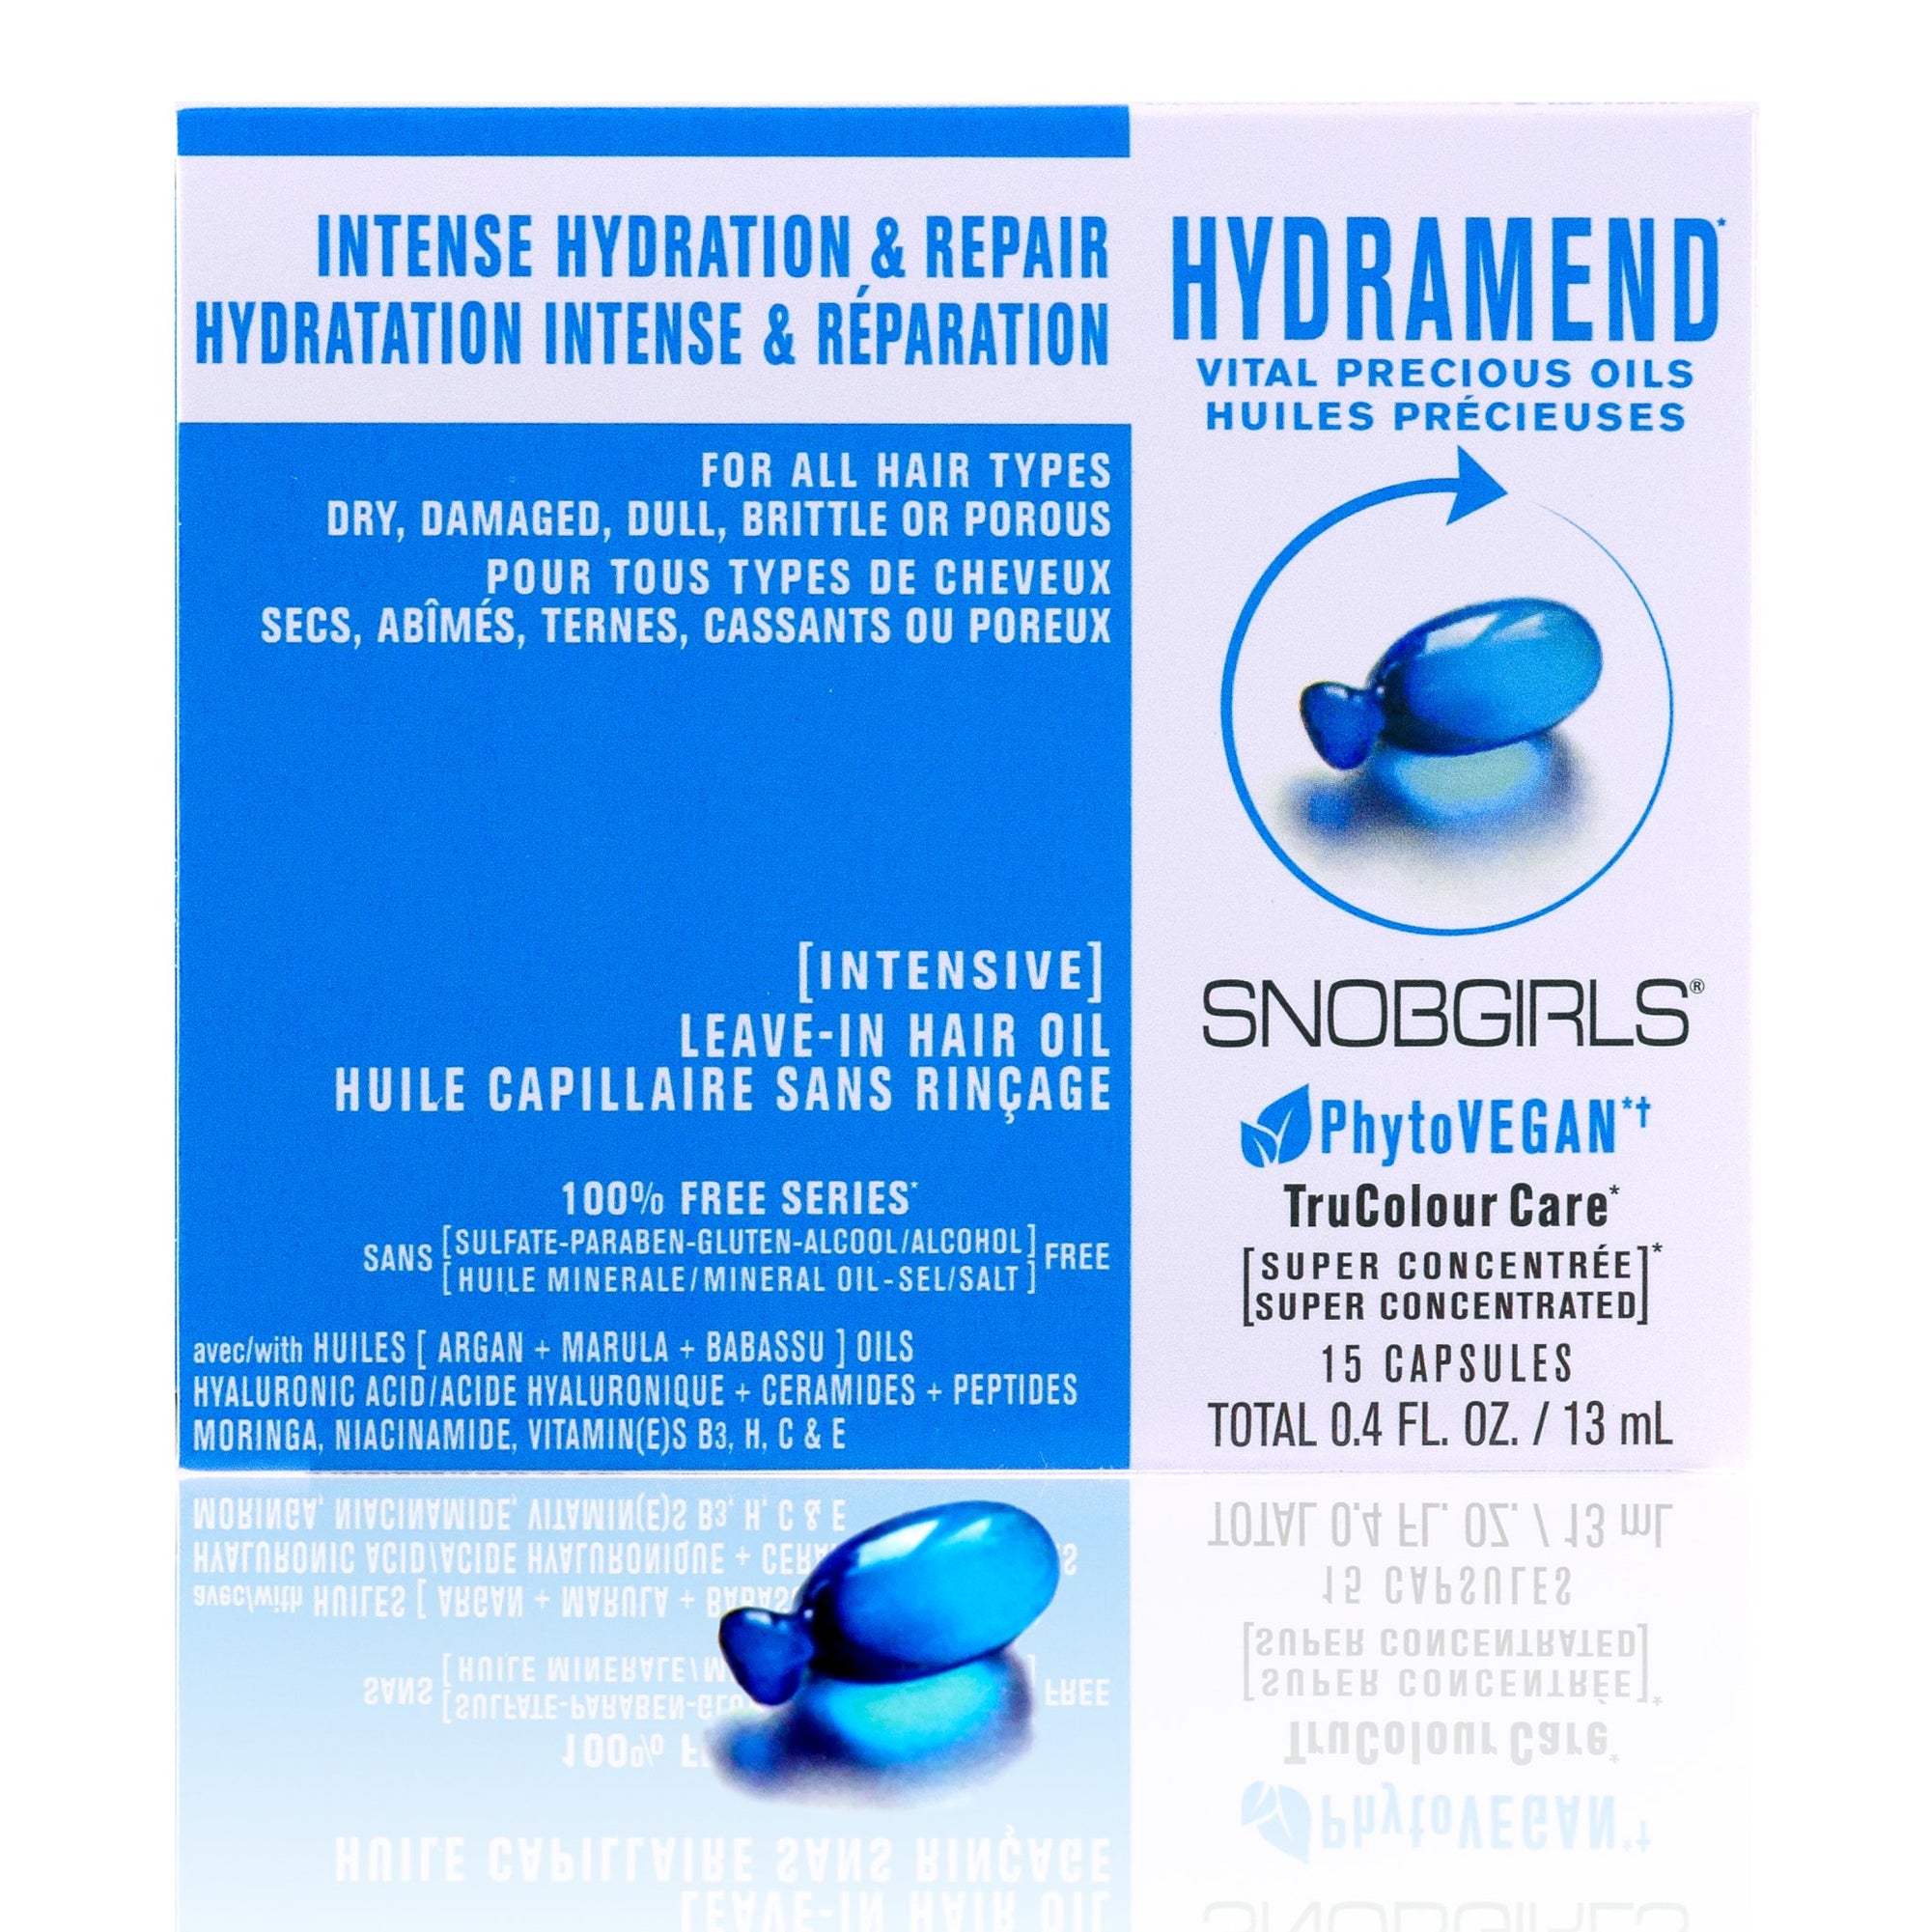 HYDRAMEND VITAL PRECIOUS OILS - PhytoVEGAN Super Concentrated Intensive Leave-In Hair Oil - SNOBGIRLS Australia